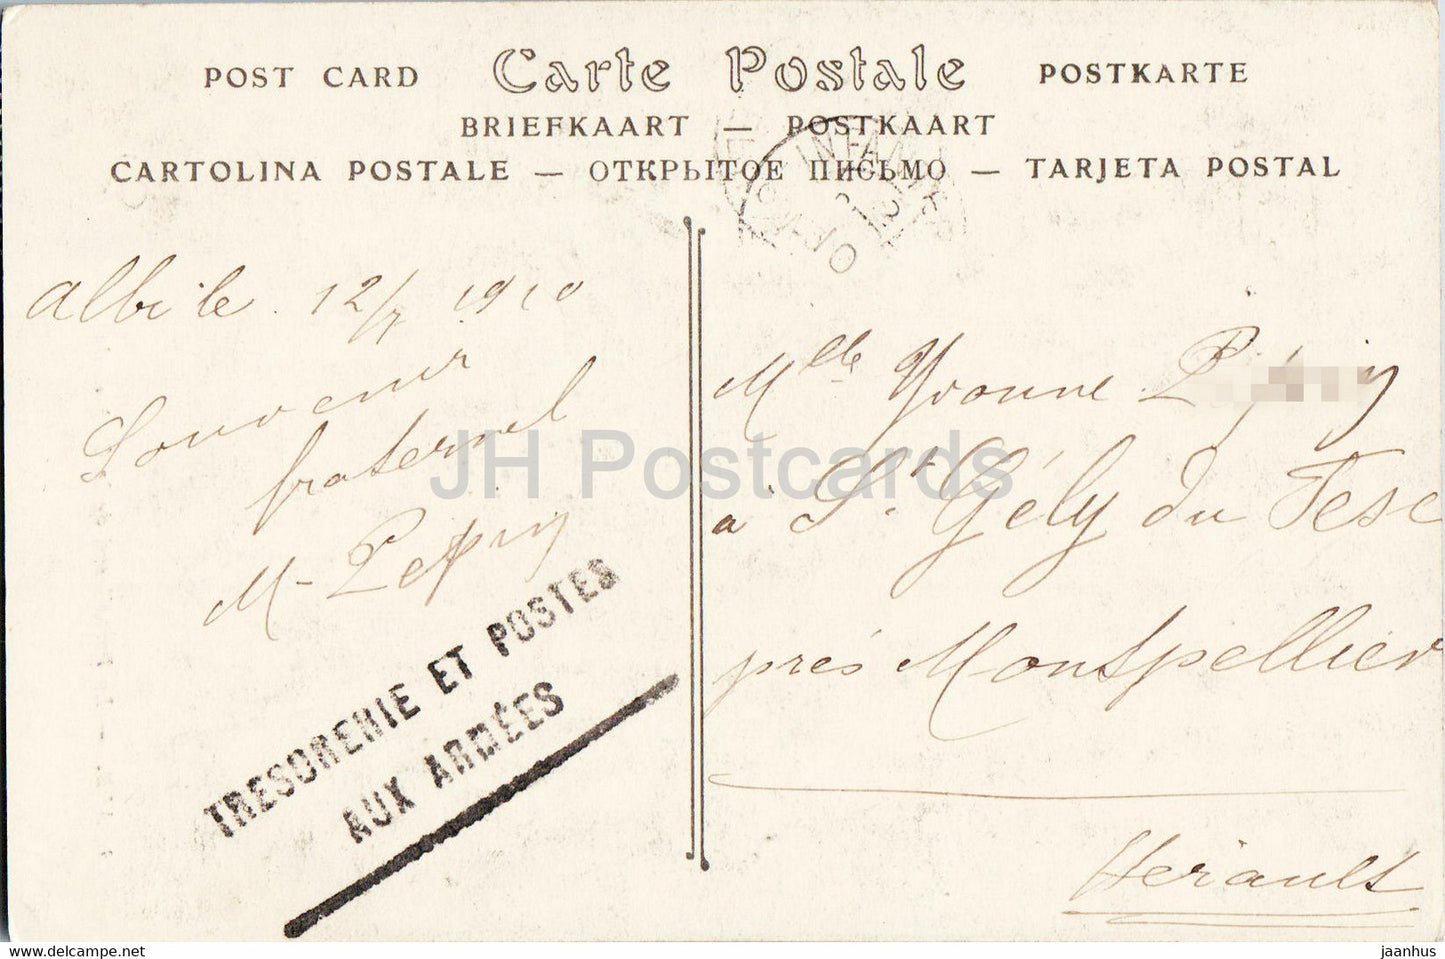 Albi - Le Portail sud de la Cathedrale - 7 - Kathedrale - alte Postkarte - 1910 - Frankreich - gebraucht